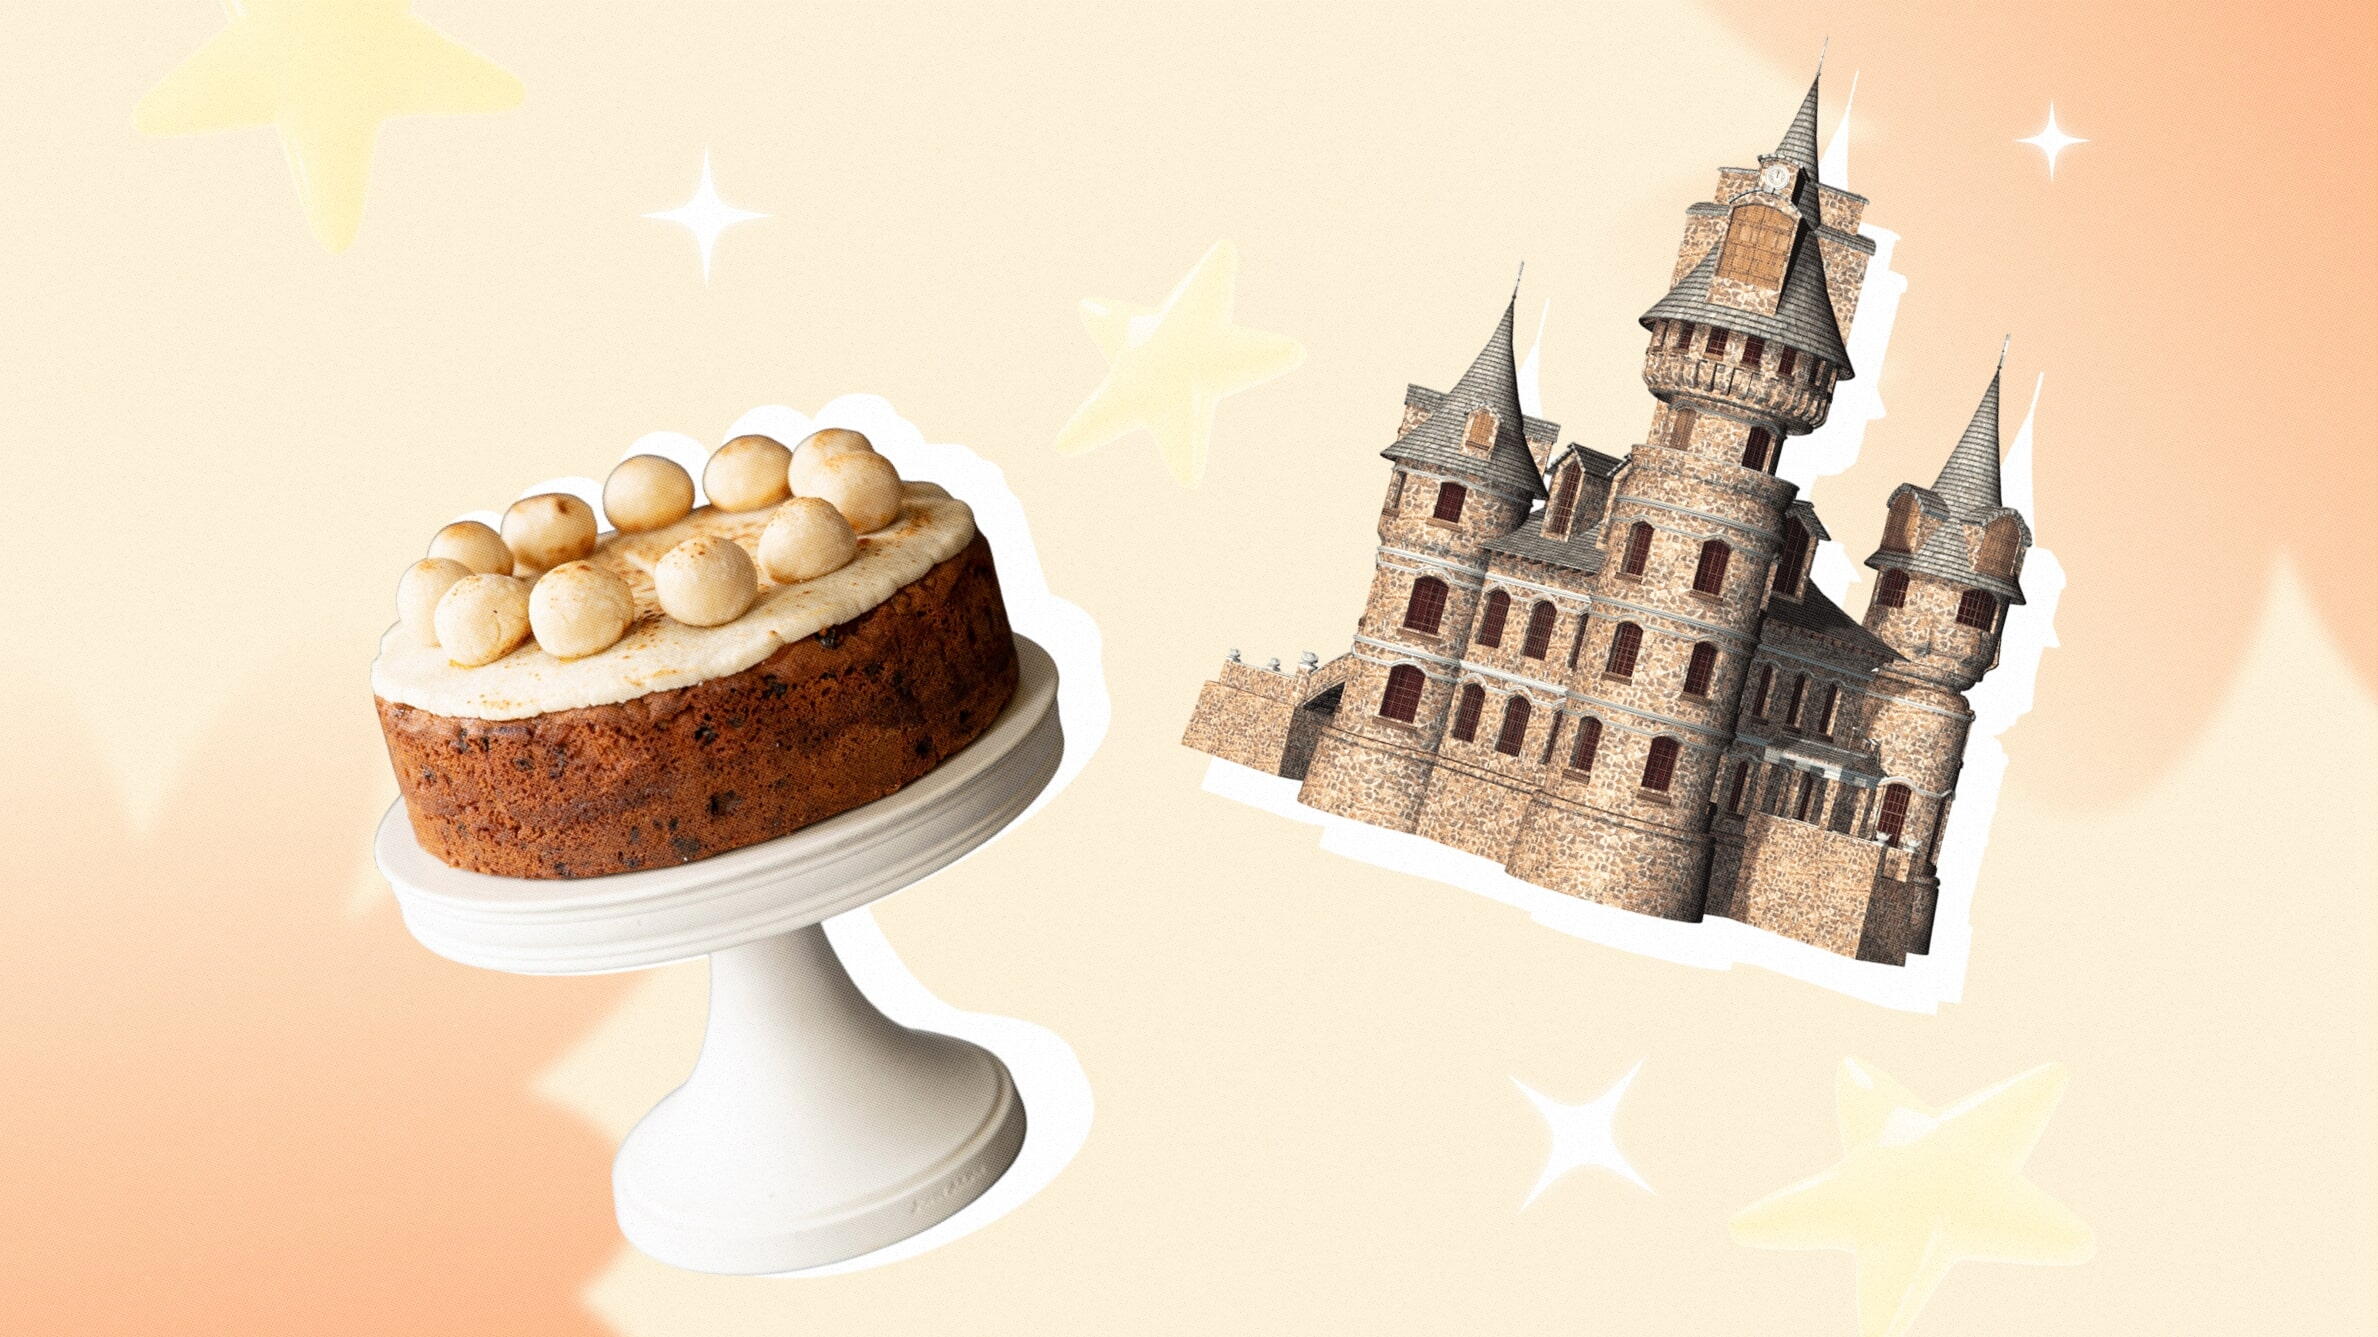 The origins of Simnel cake